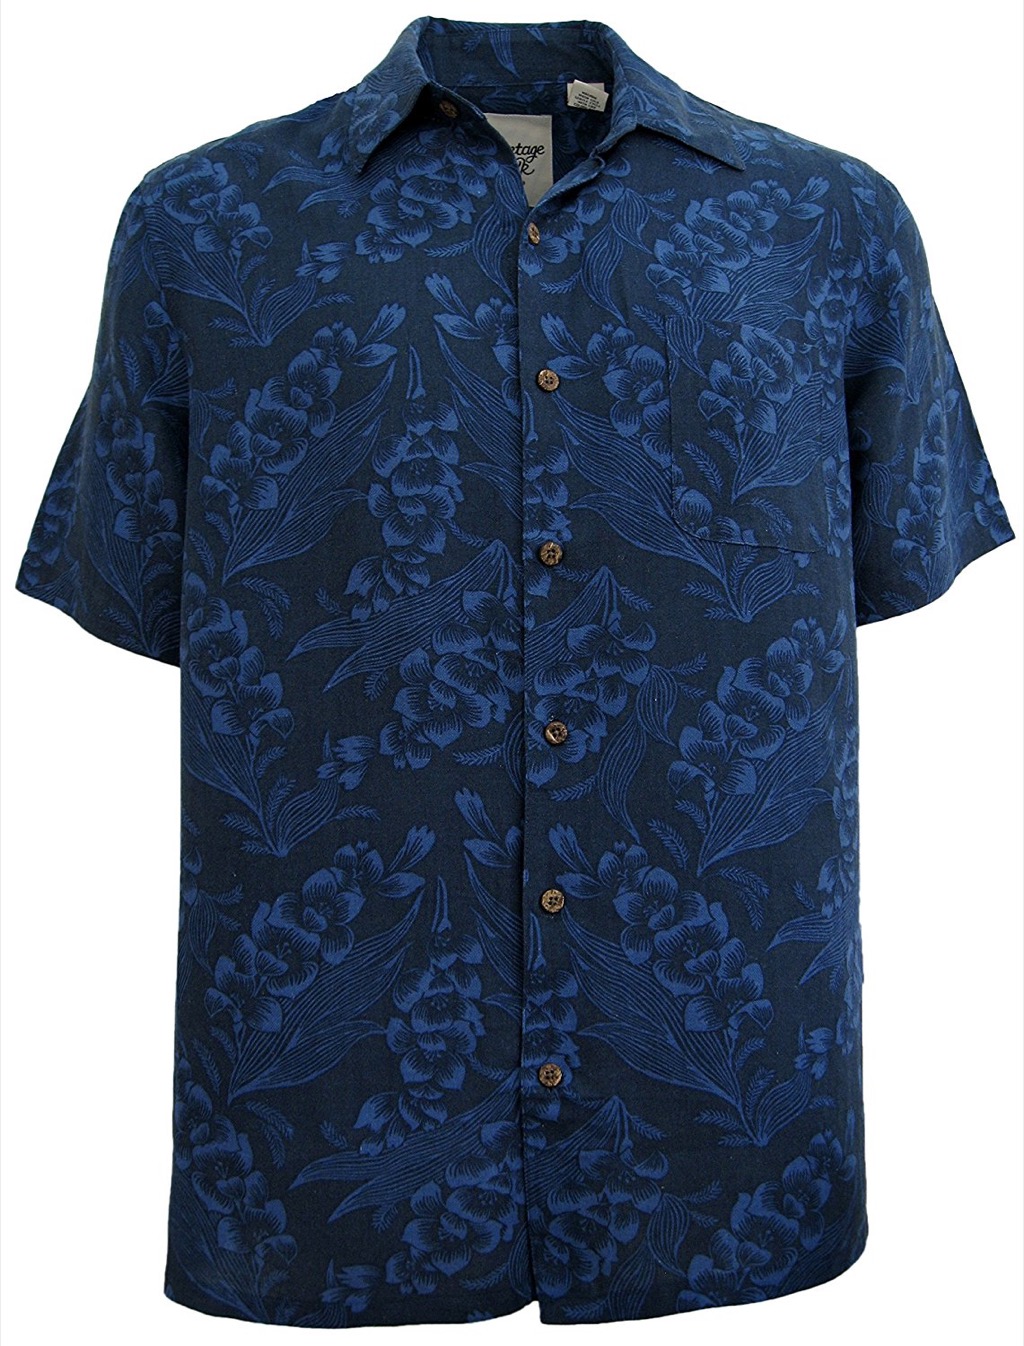 10 Hawaiian Shirts For Rocking a Cool Island Vibe All Summer Long ...